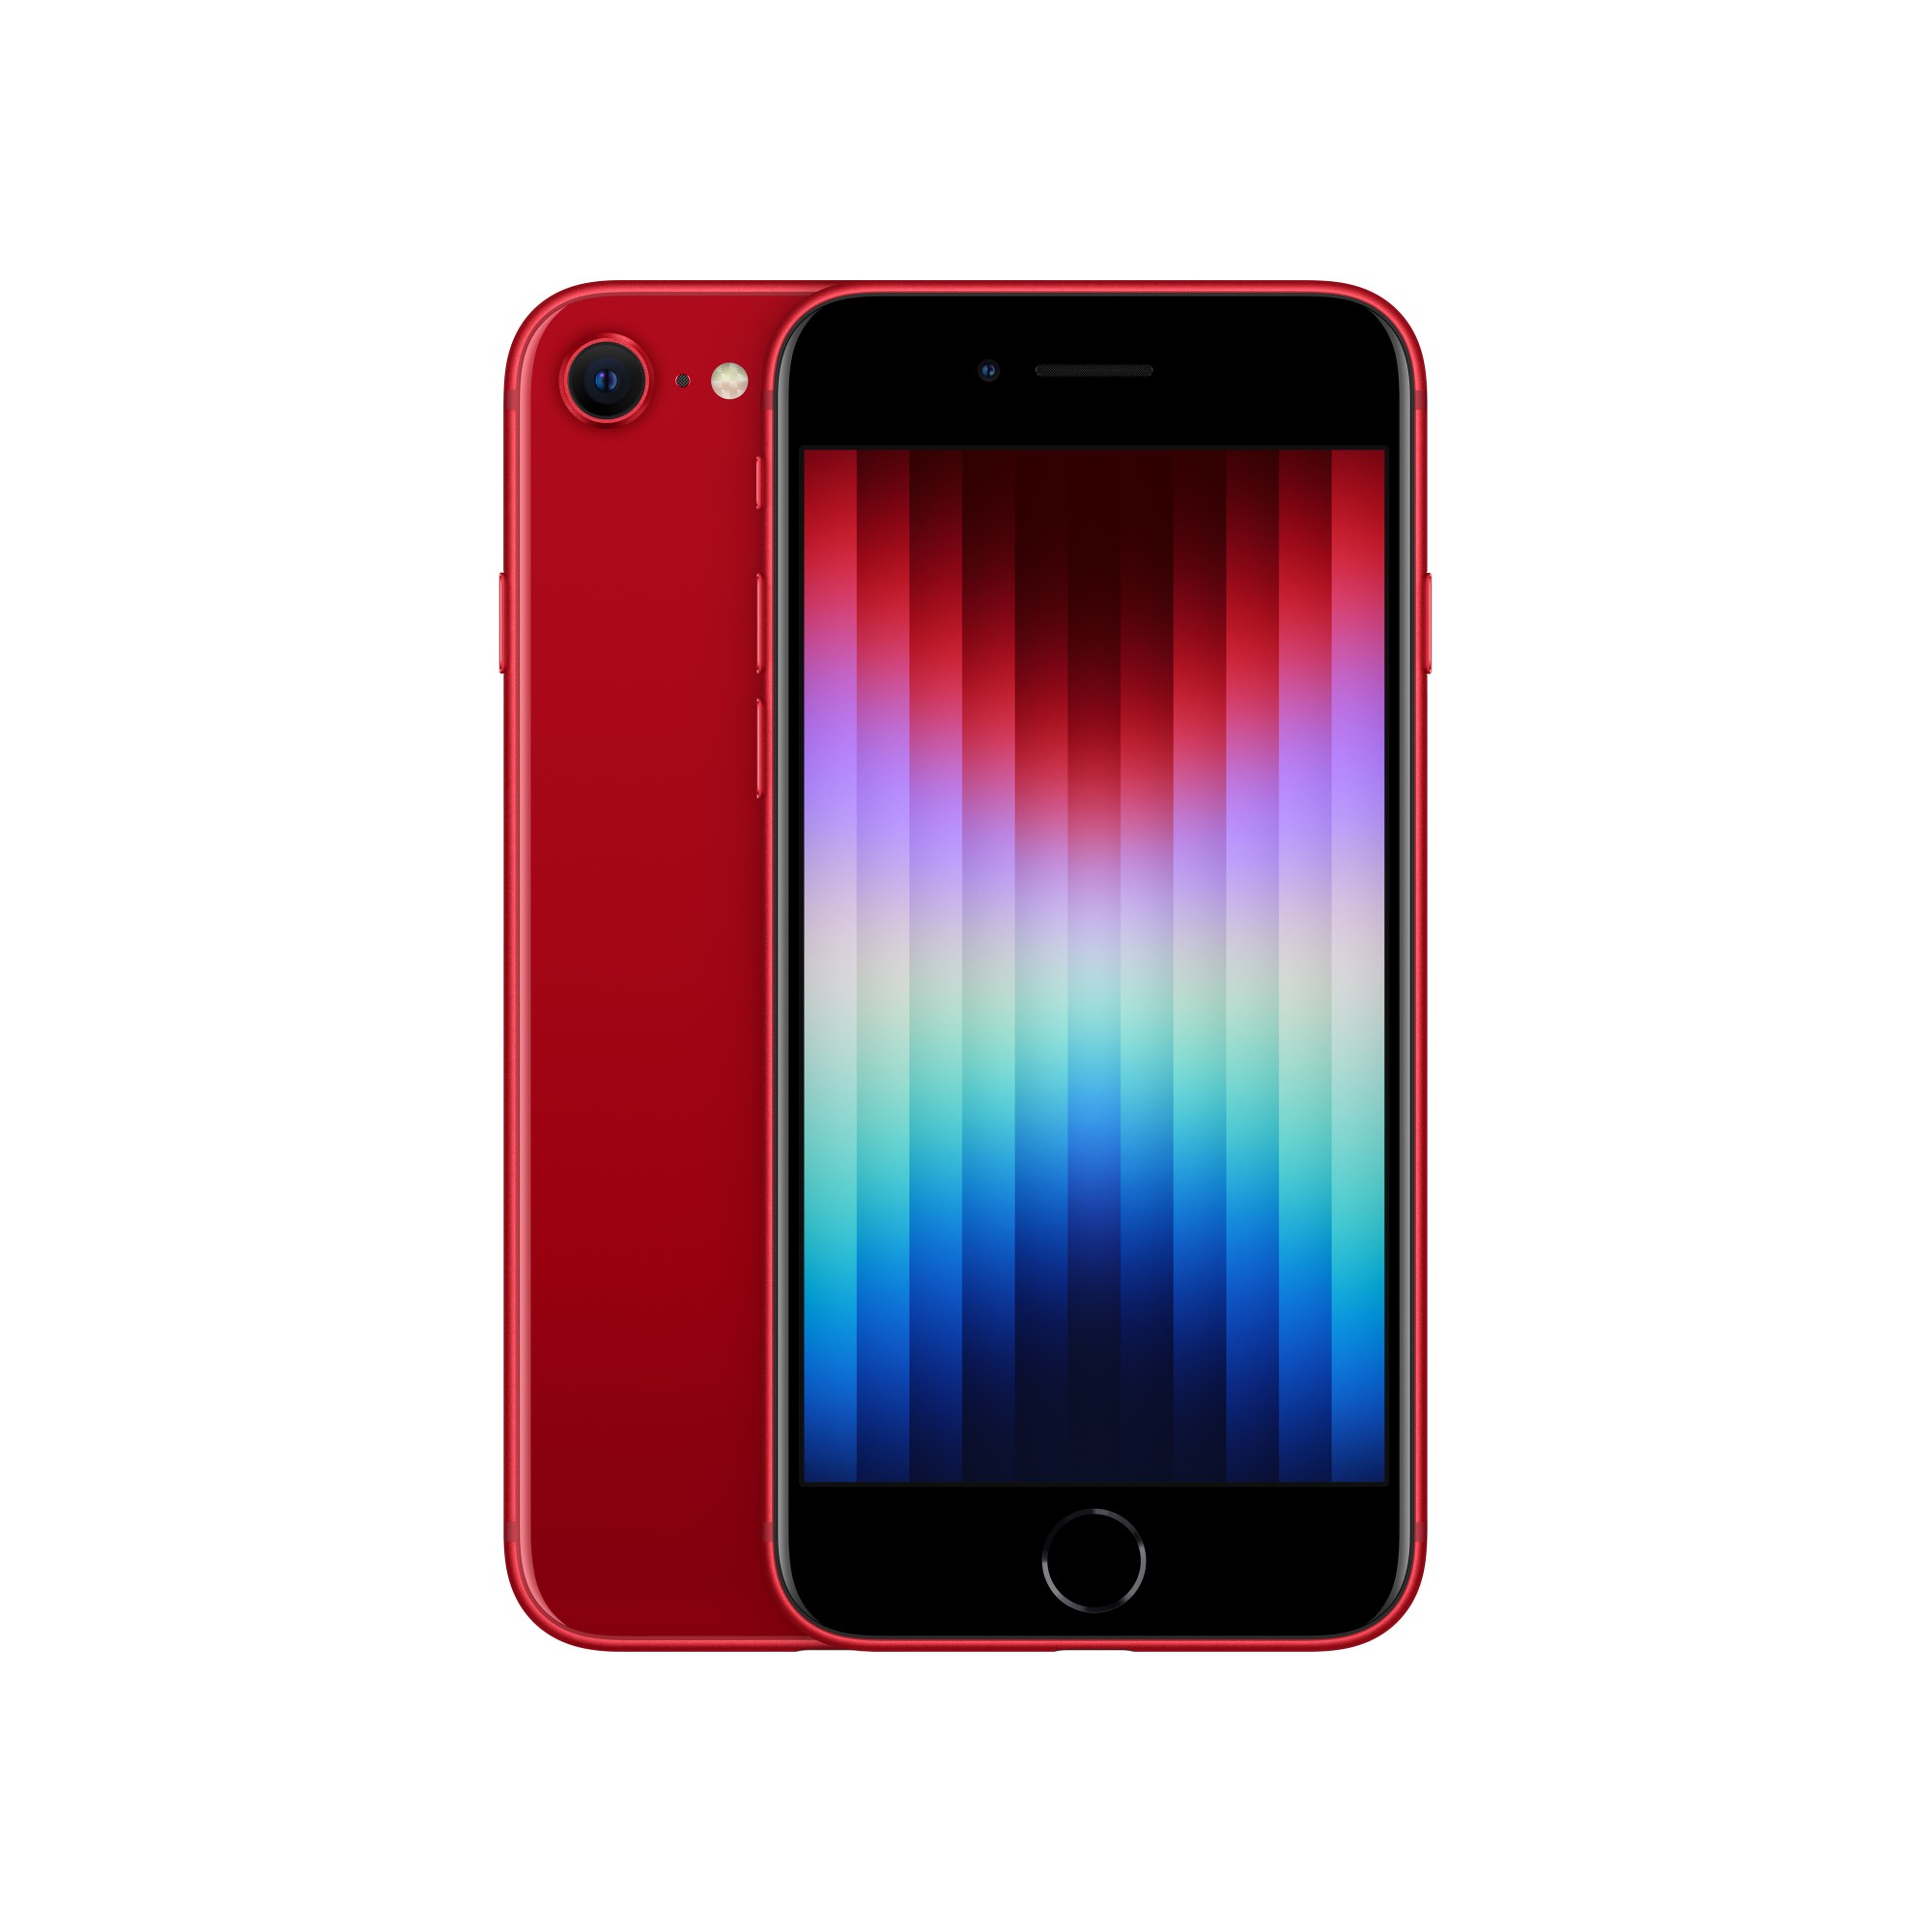 iPhone SE, 4.7" LCD, 1334 x 750, 326ppi, 64GB, A15 Bionic, LTE, 802.11ax, Bluetooth 5.0, NFC, 12MP + 7MP, IP67, iOS 15